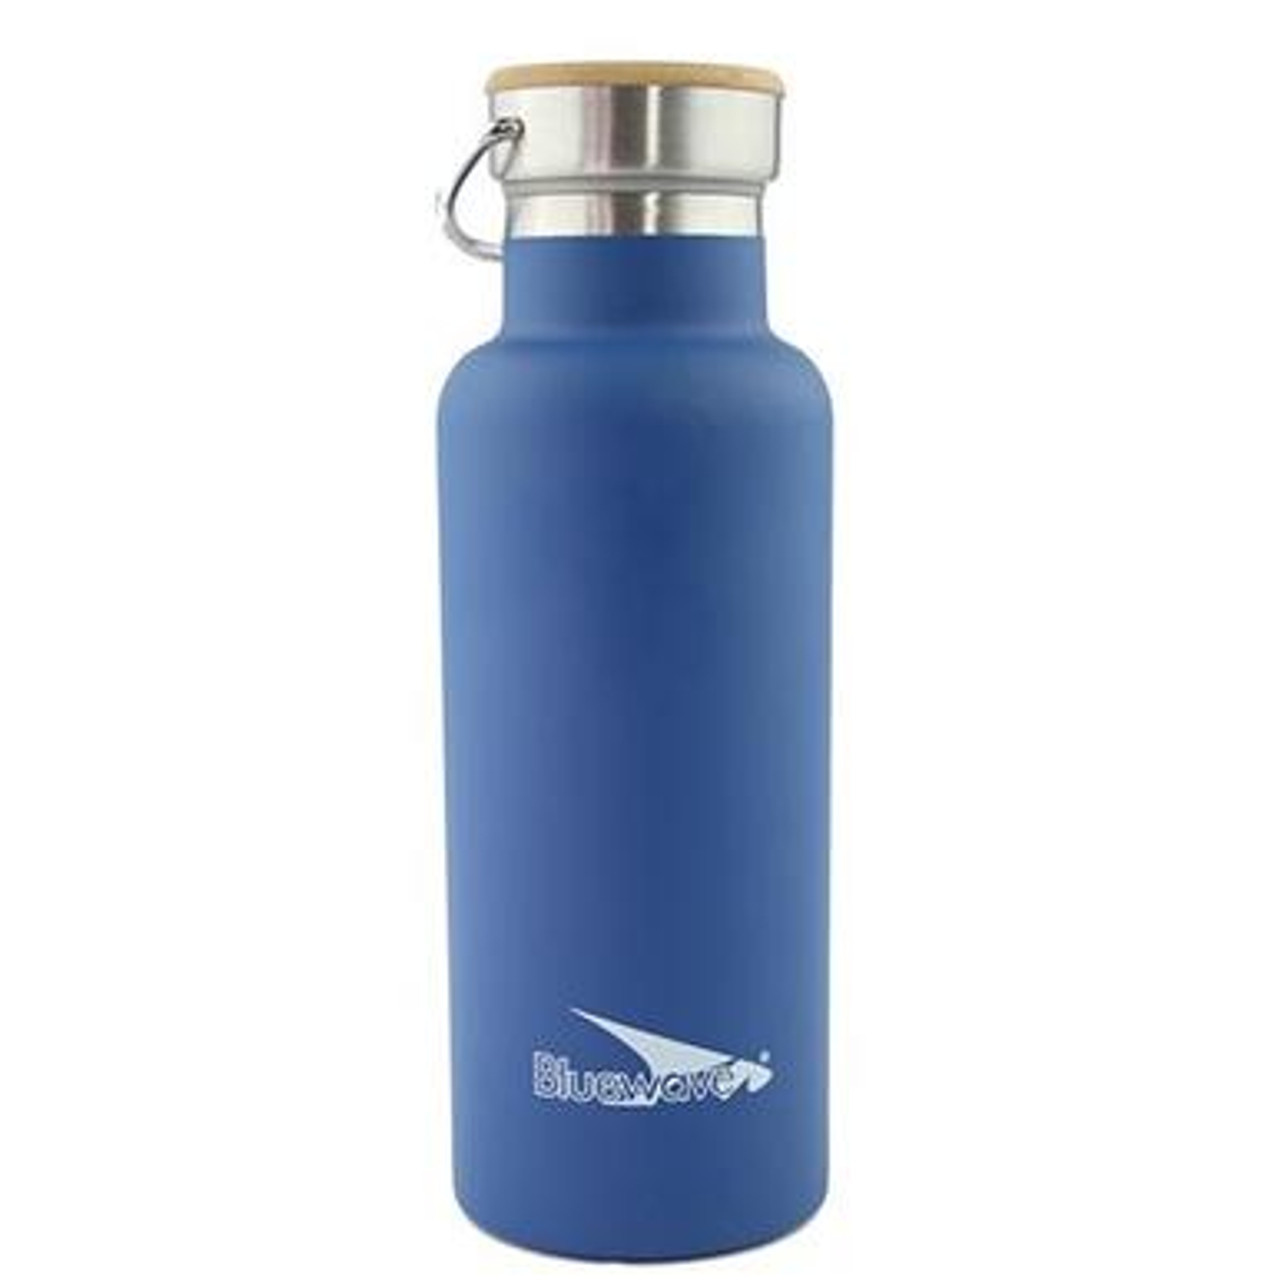 D2 Insulated Water Bottle - 500ml / 17oz Navy Blue - Survival Pro Shop